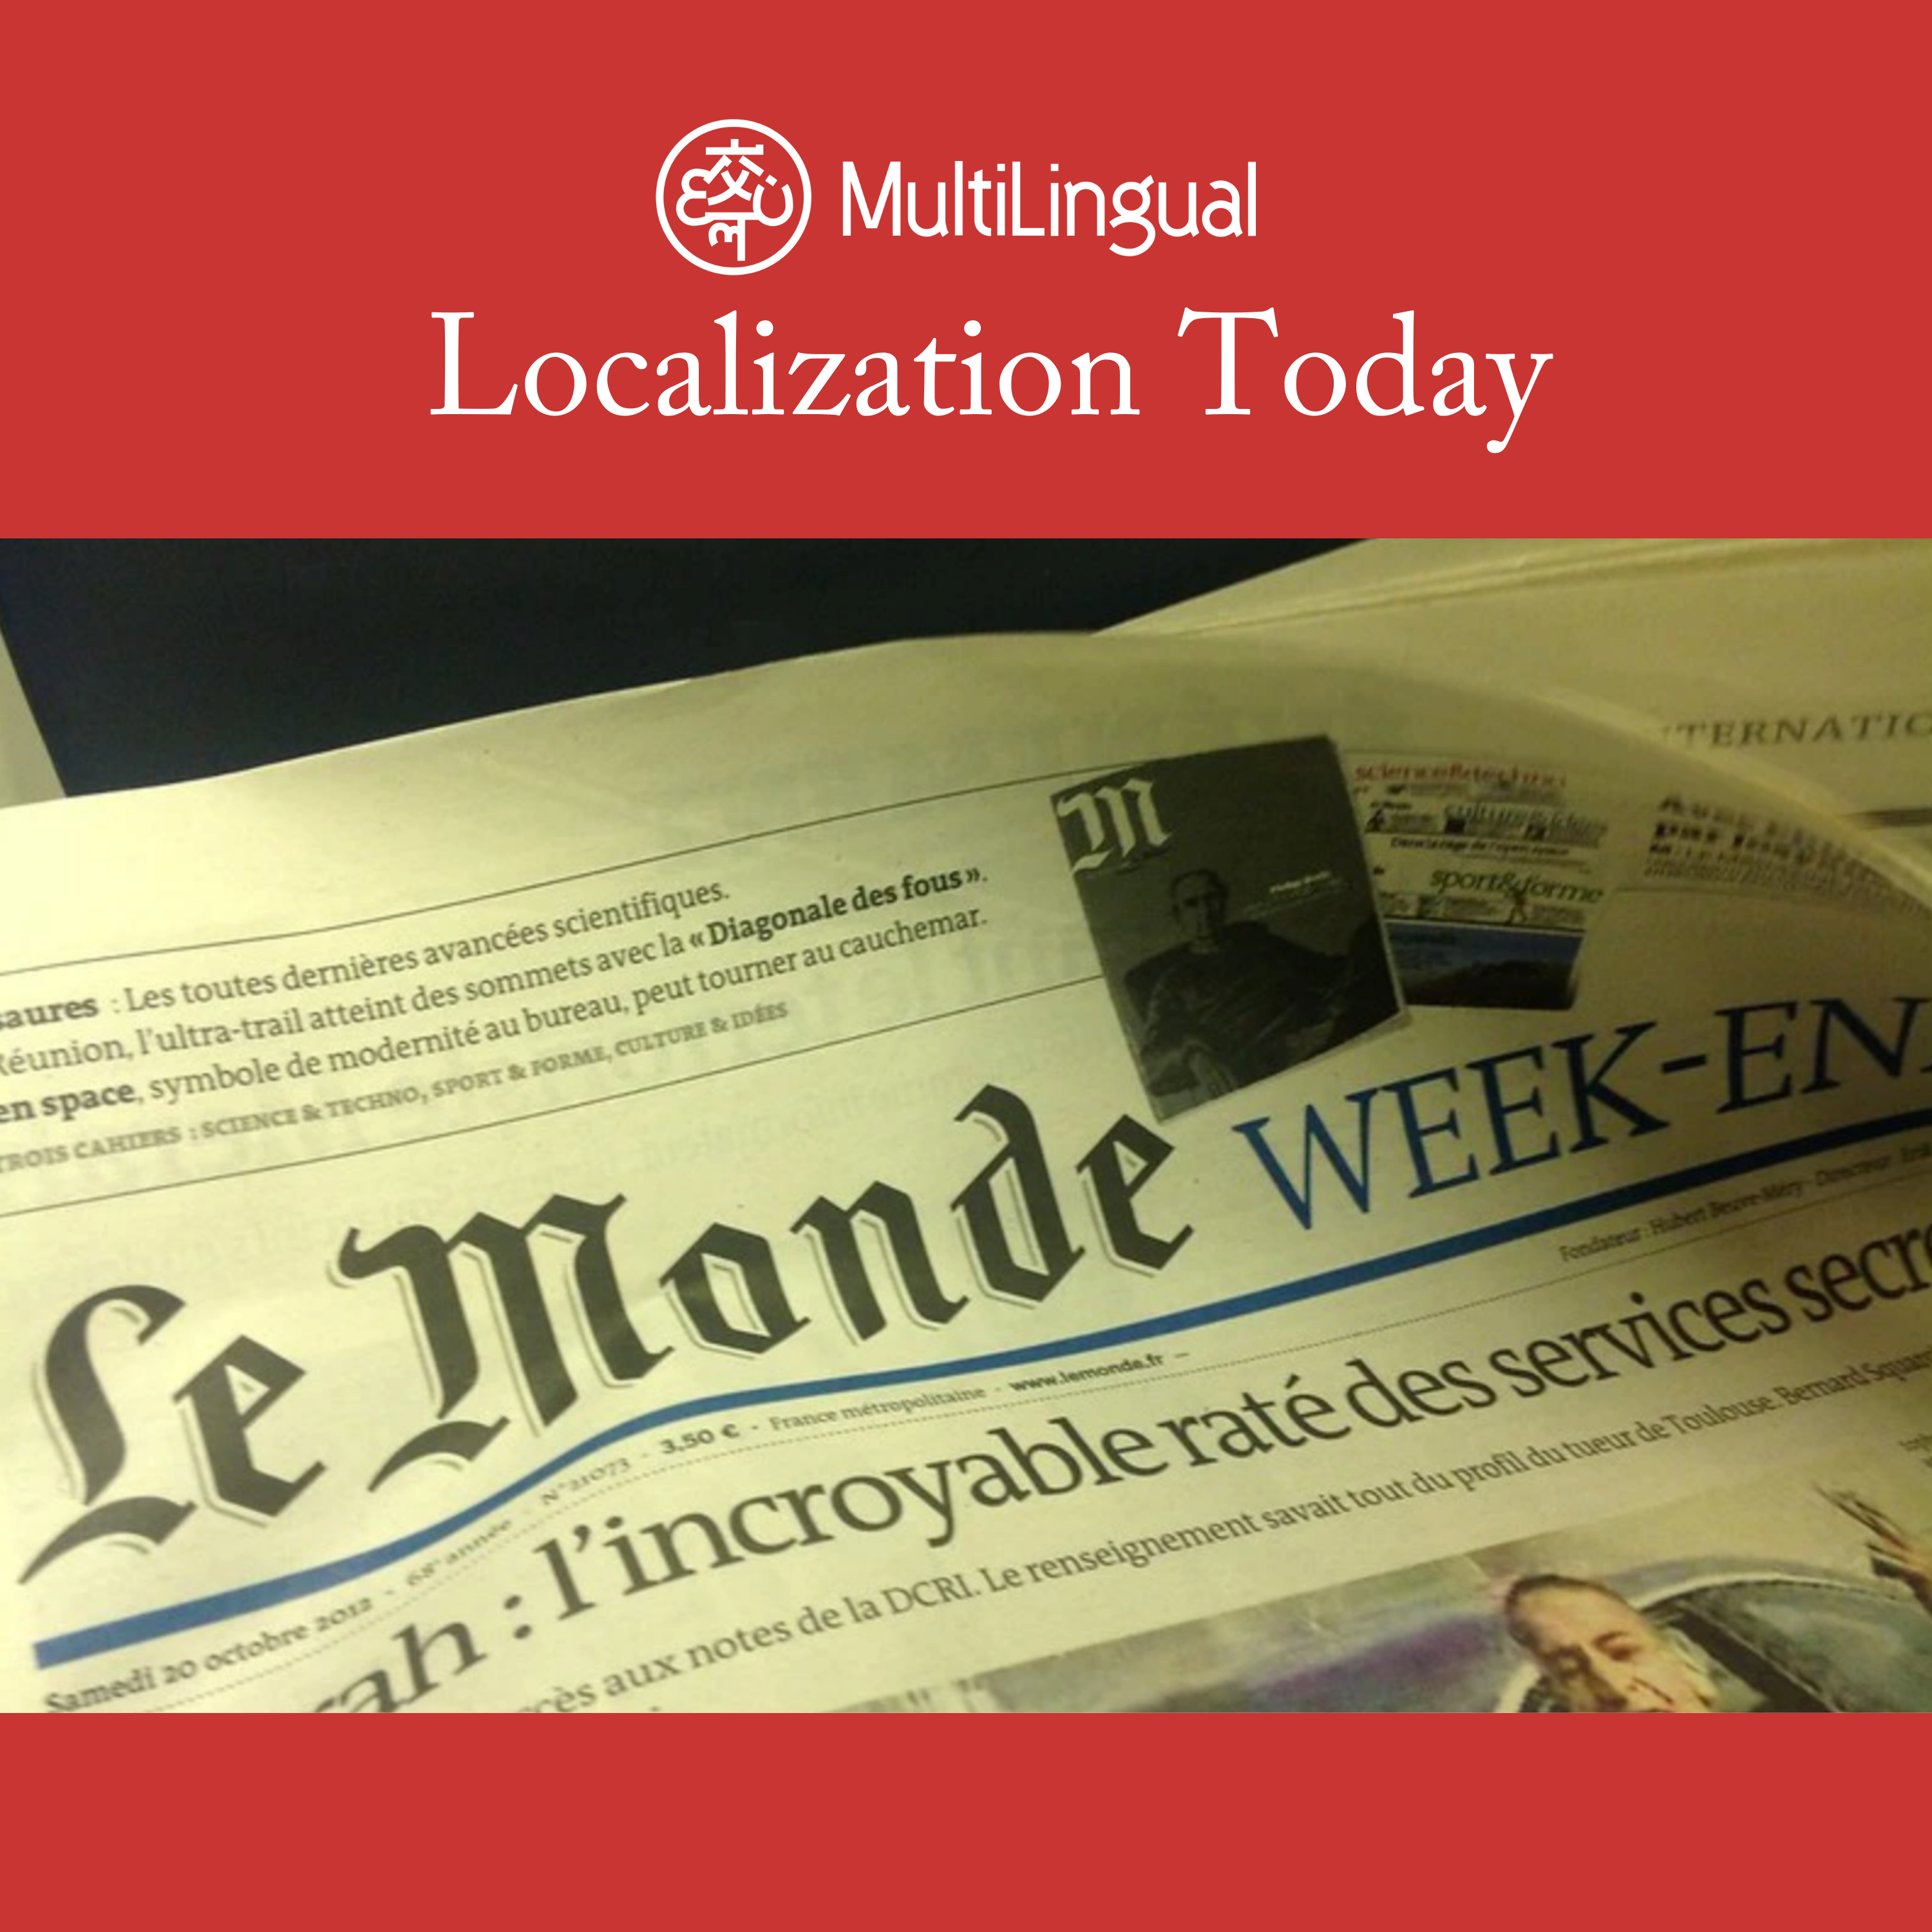 Lionbridge and Le Monde partner up to offer English news service